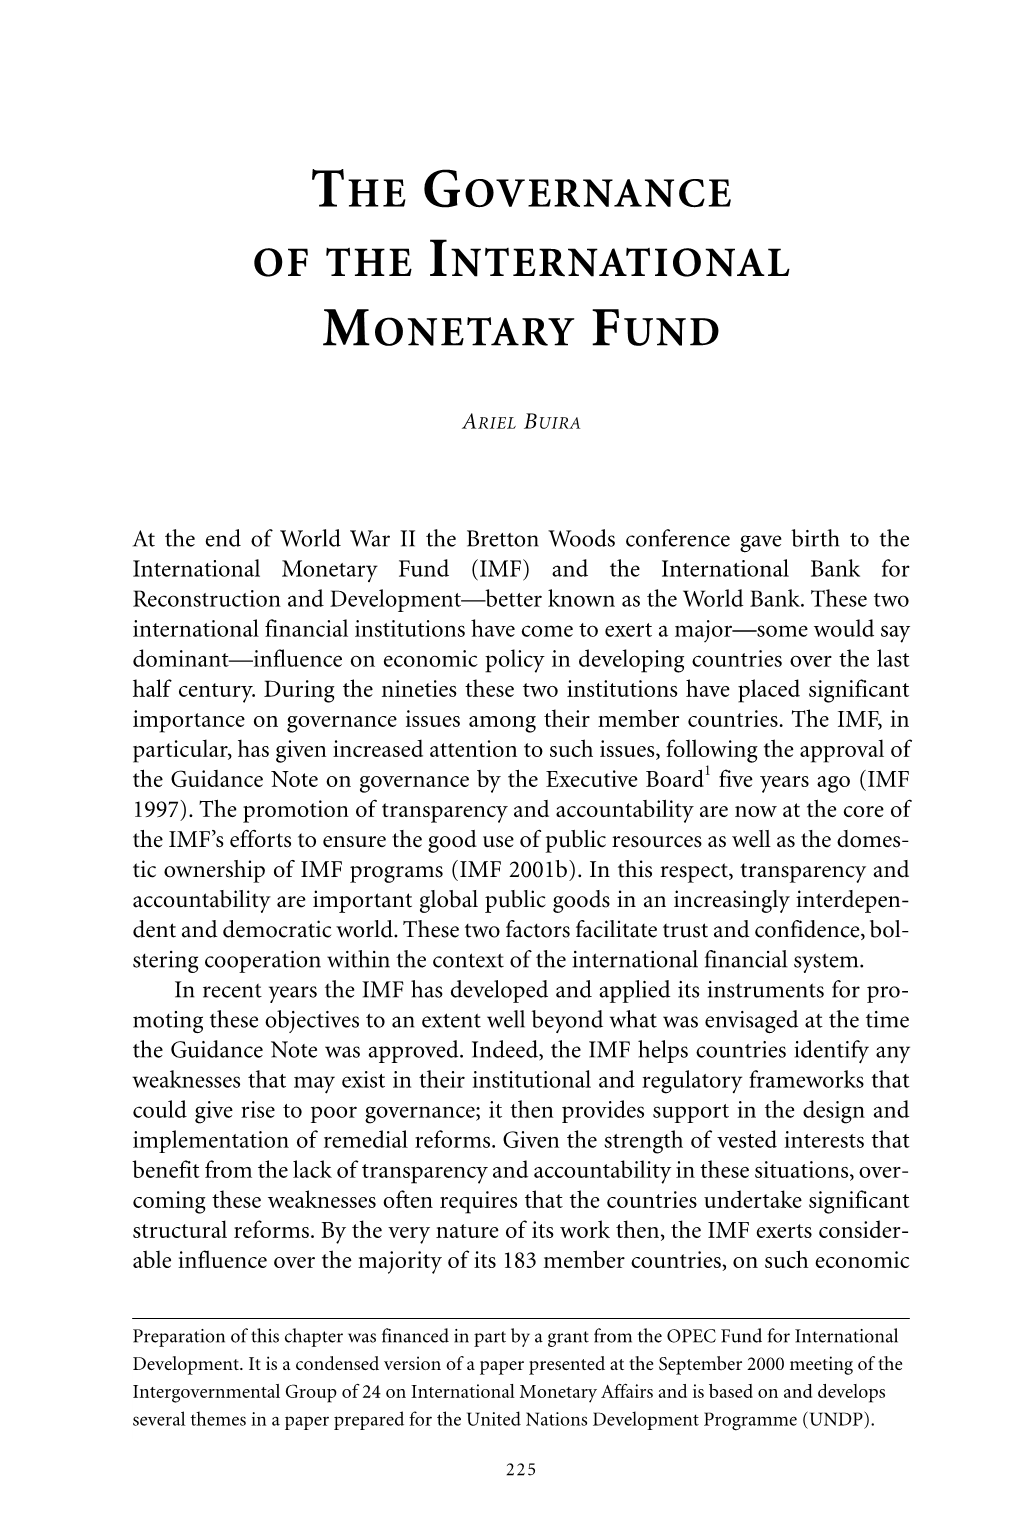 The Governance of the International Monetary Fund